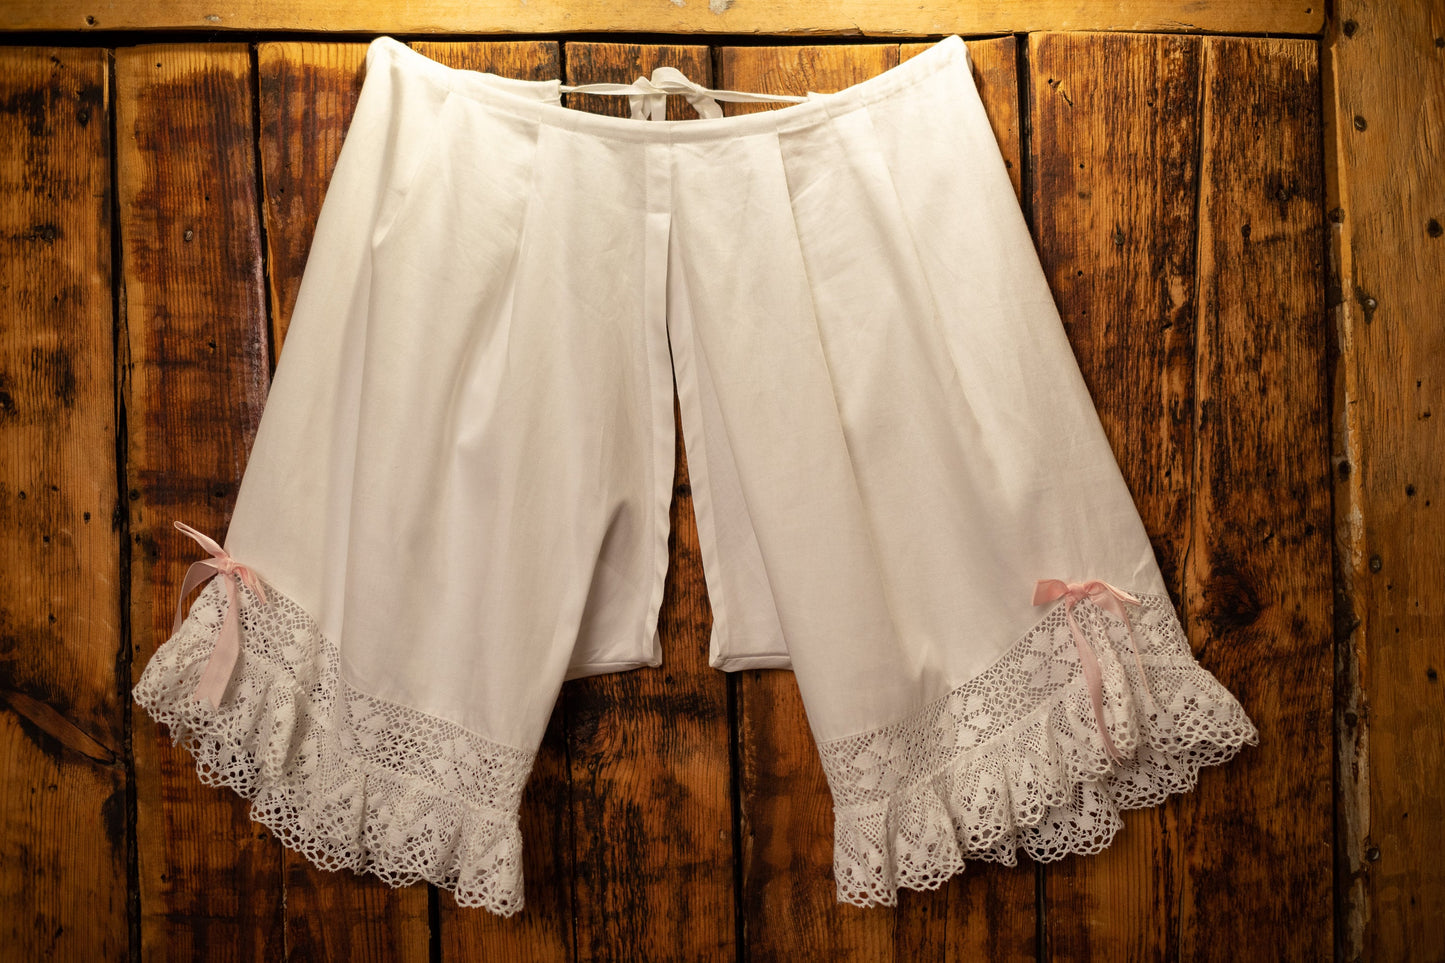 Mademoiselle de France - French Vintage Inspired Underwear Set in White Cotton